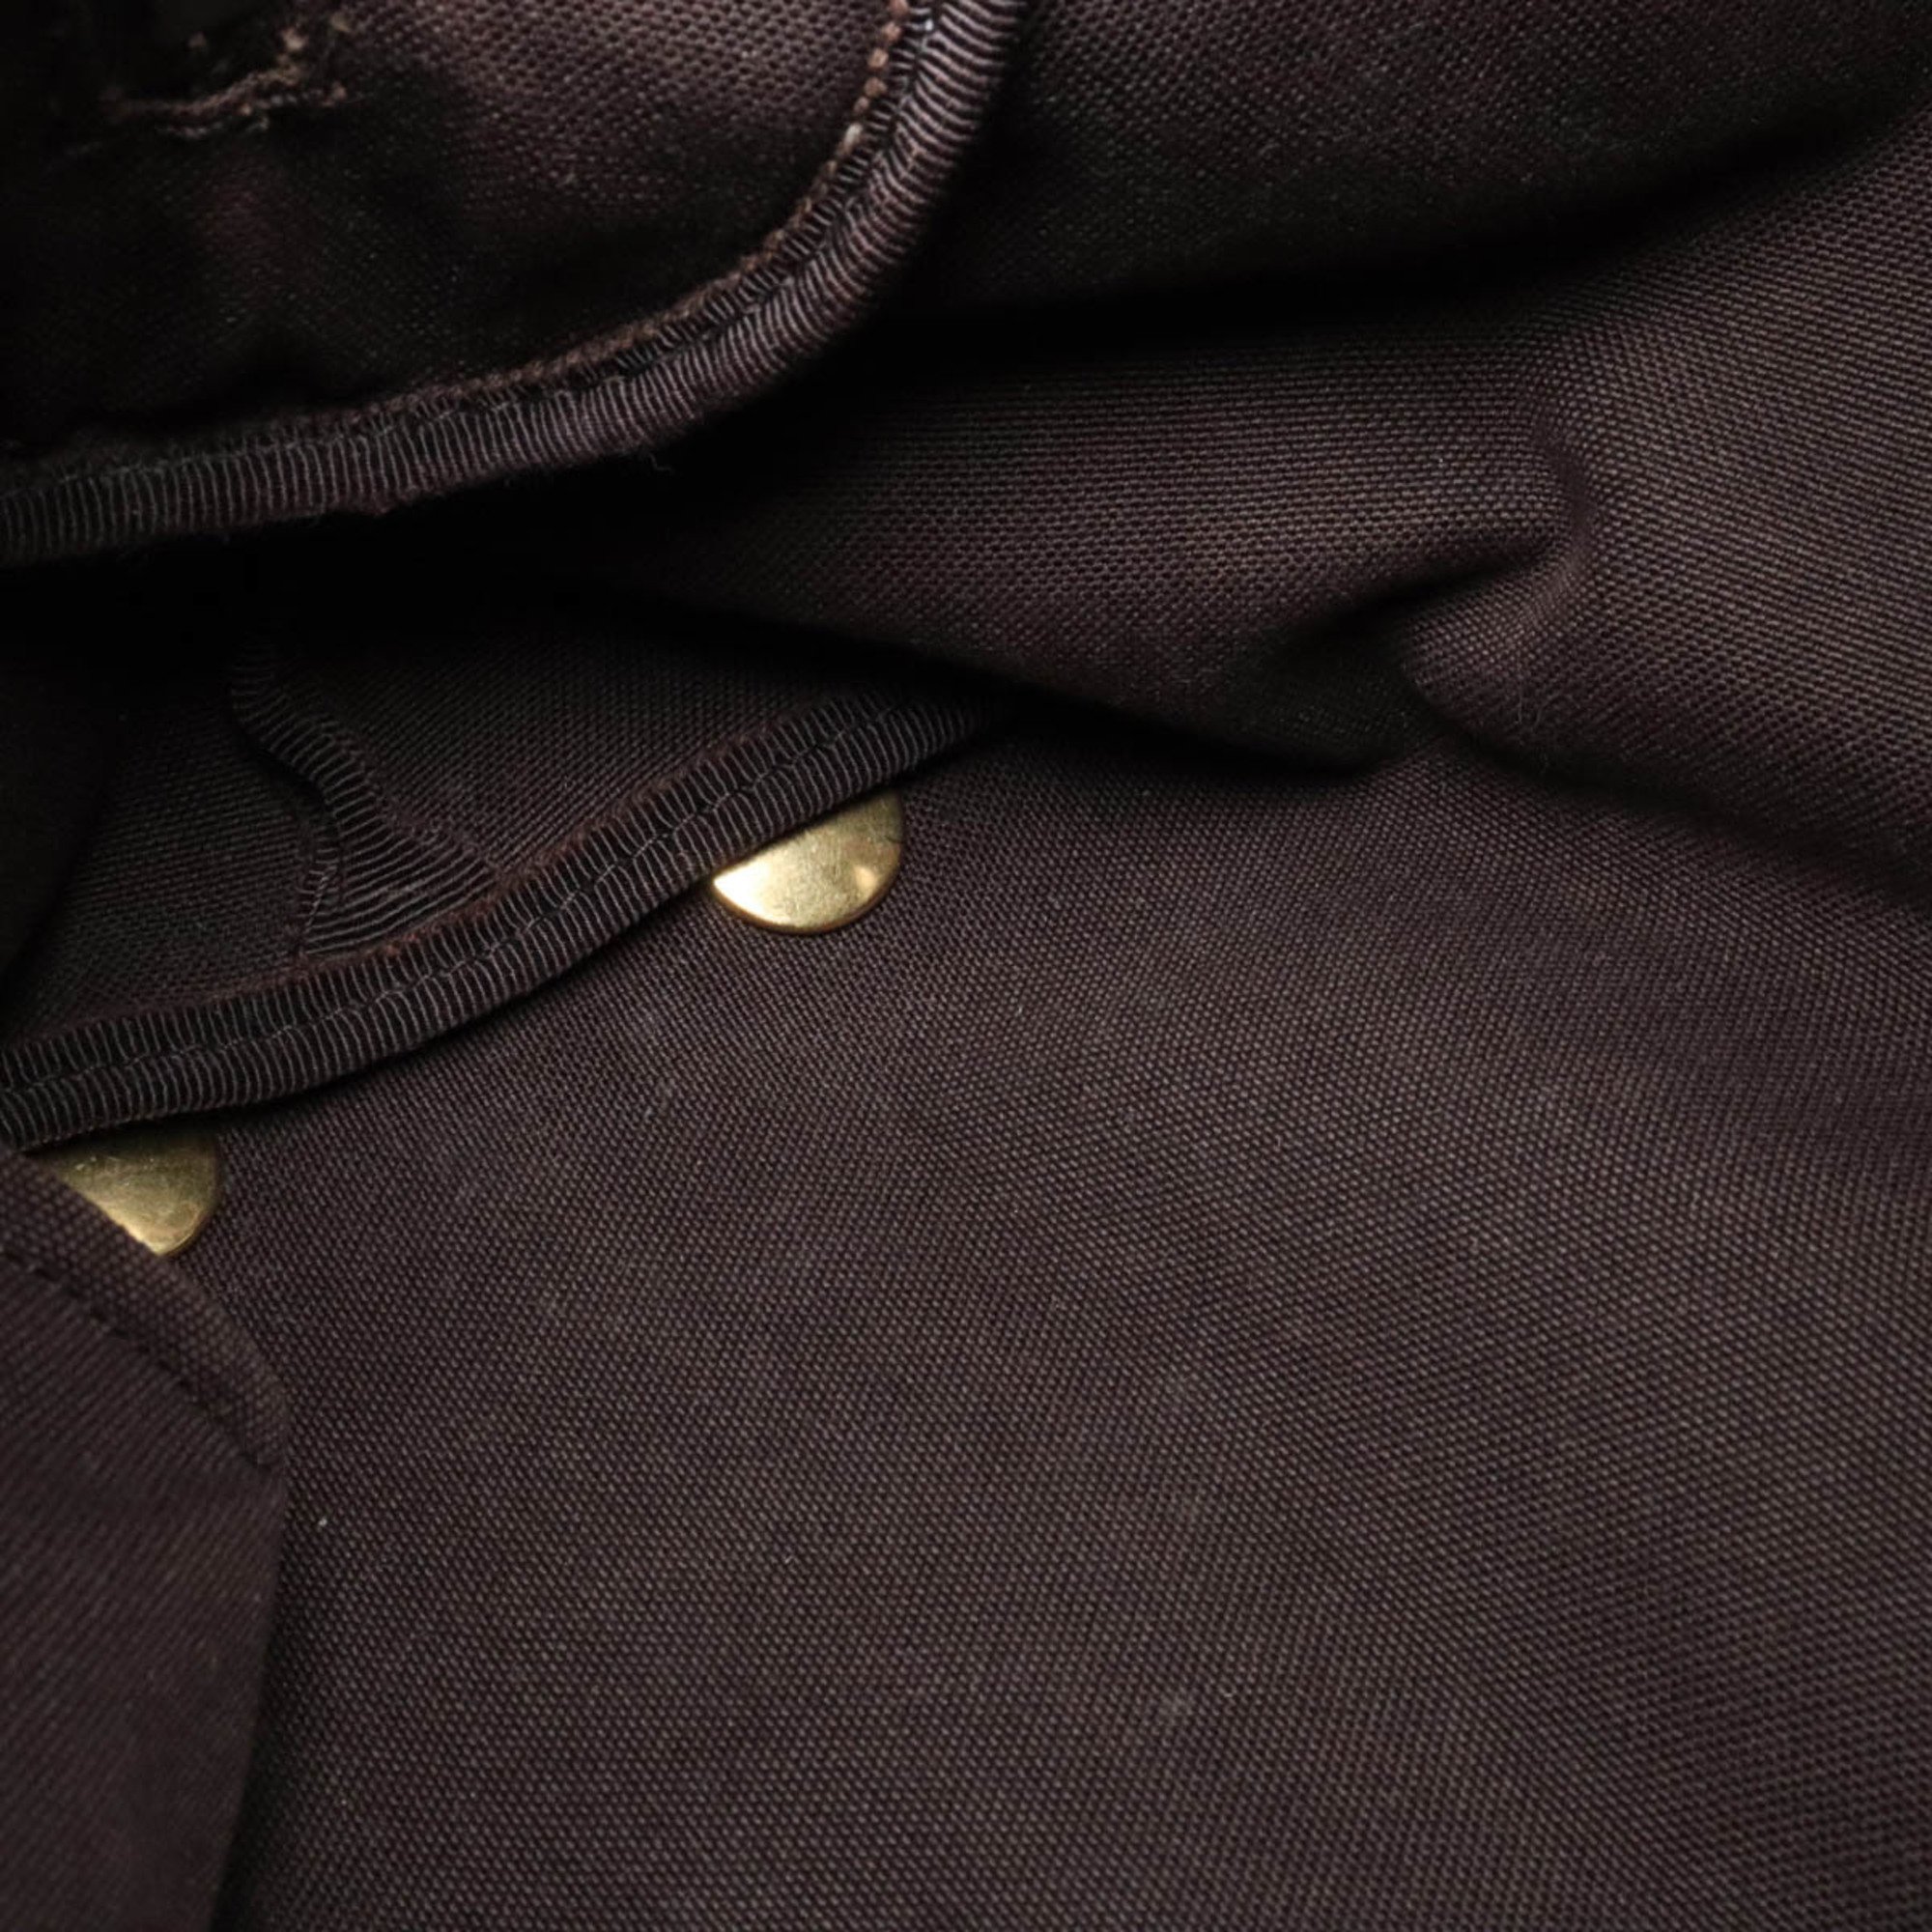 GUCCI GG Crystal Hysteria Handbag Tote Bag Coated Canvas Leather Khaki Beige Dark Brown 209600